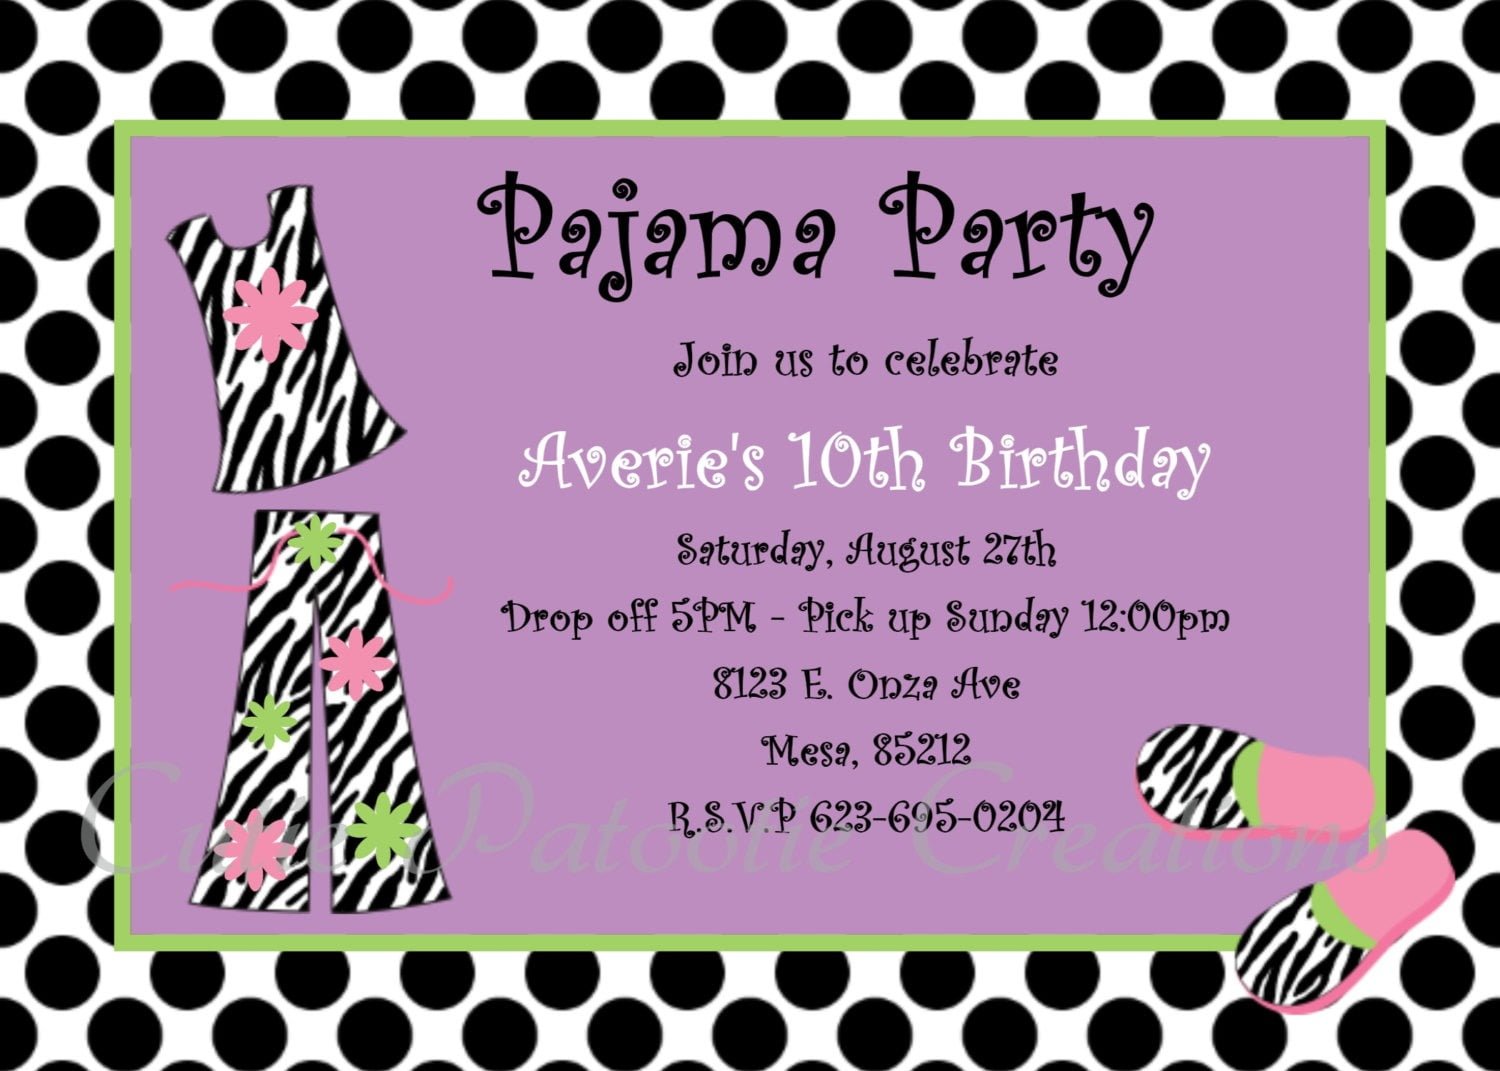 Pajama Party Invitation Template